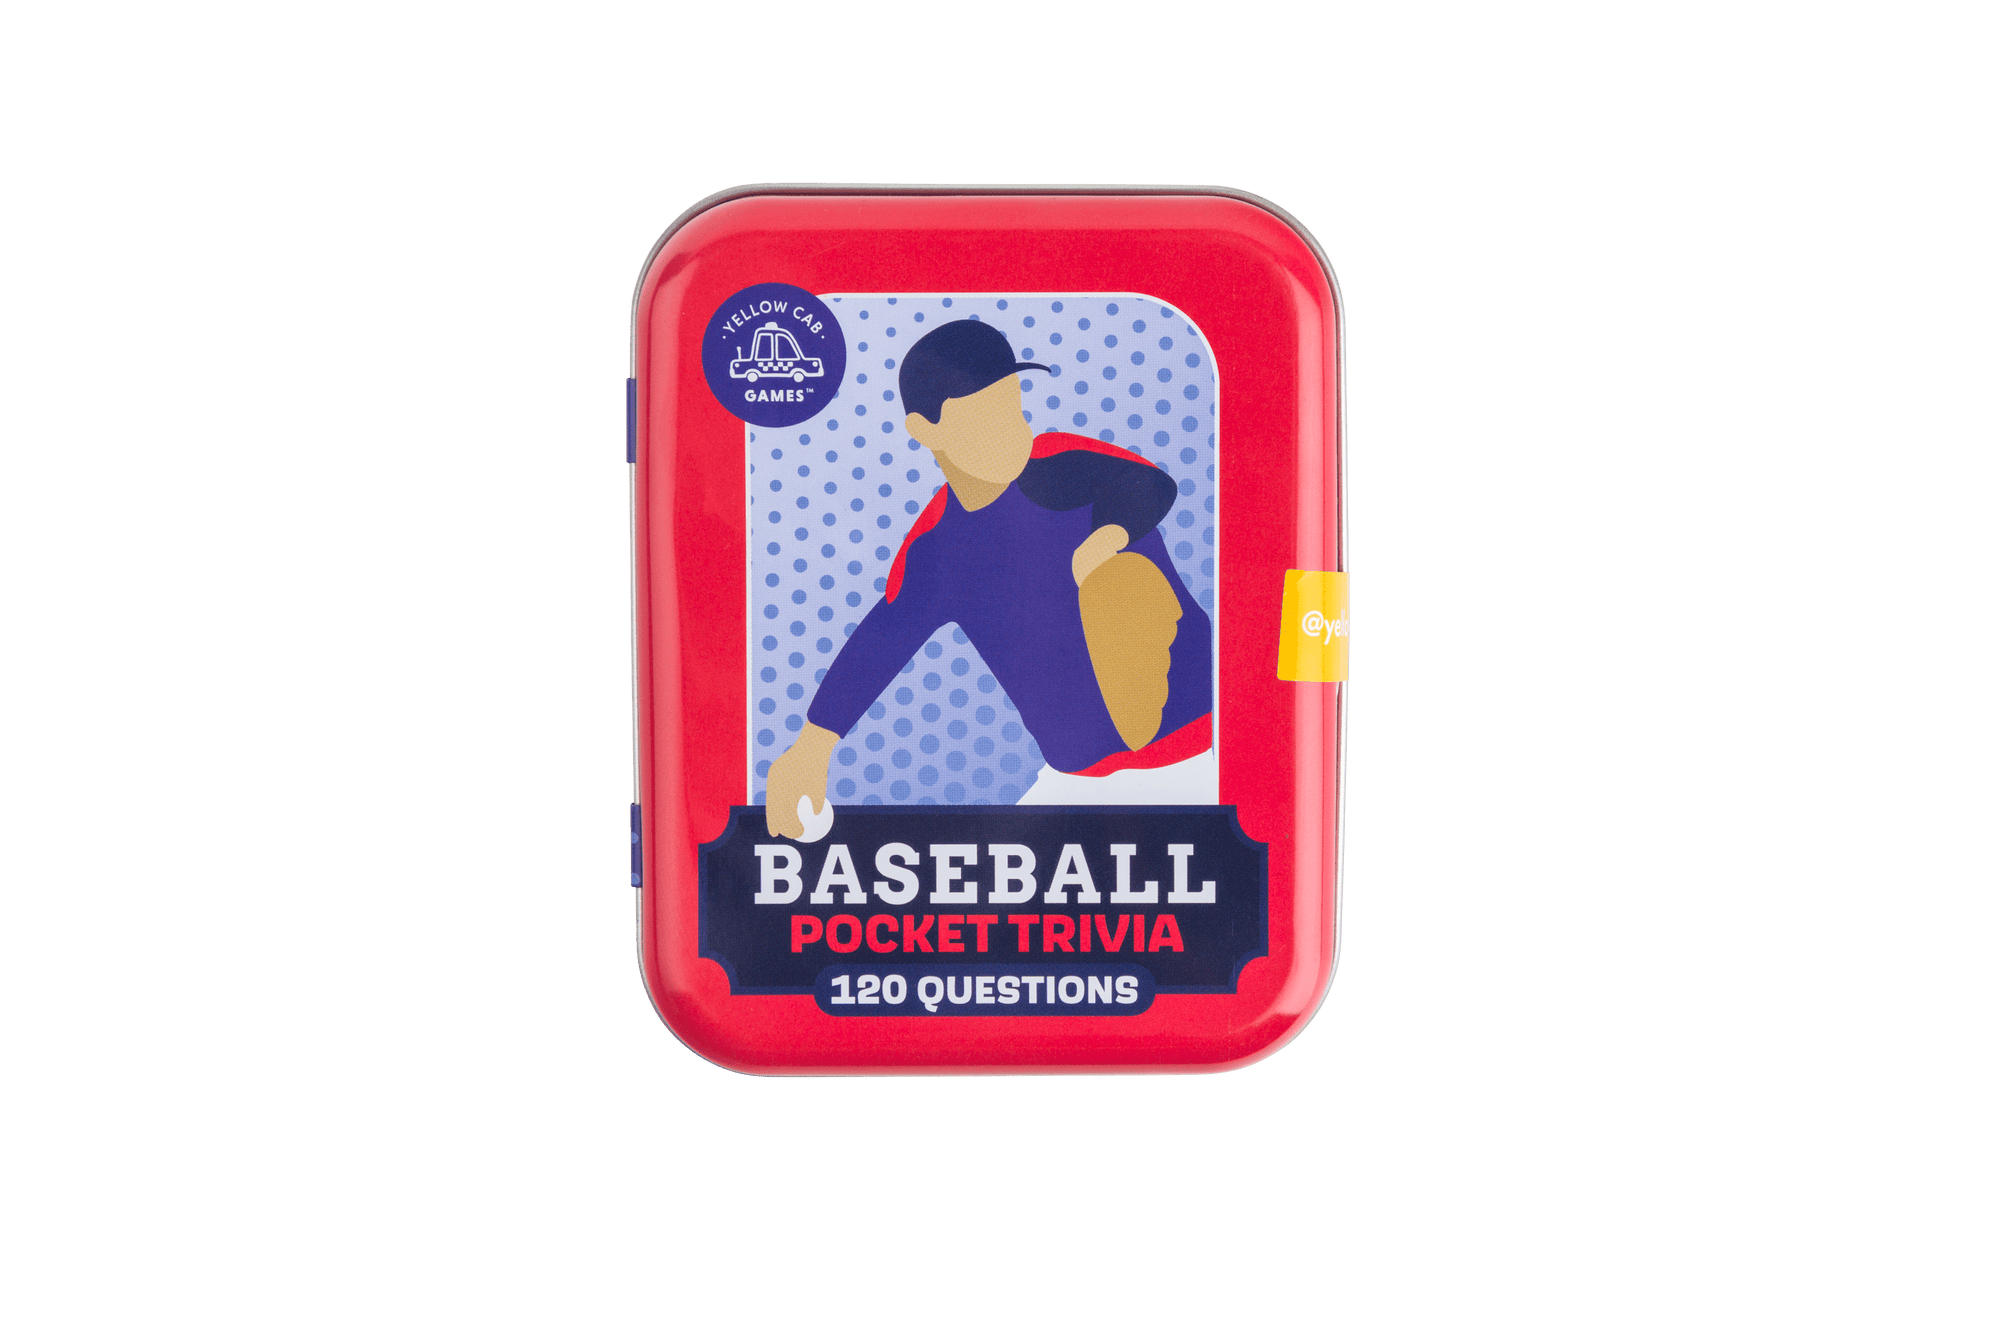 Baseball Pocket Trivia